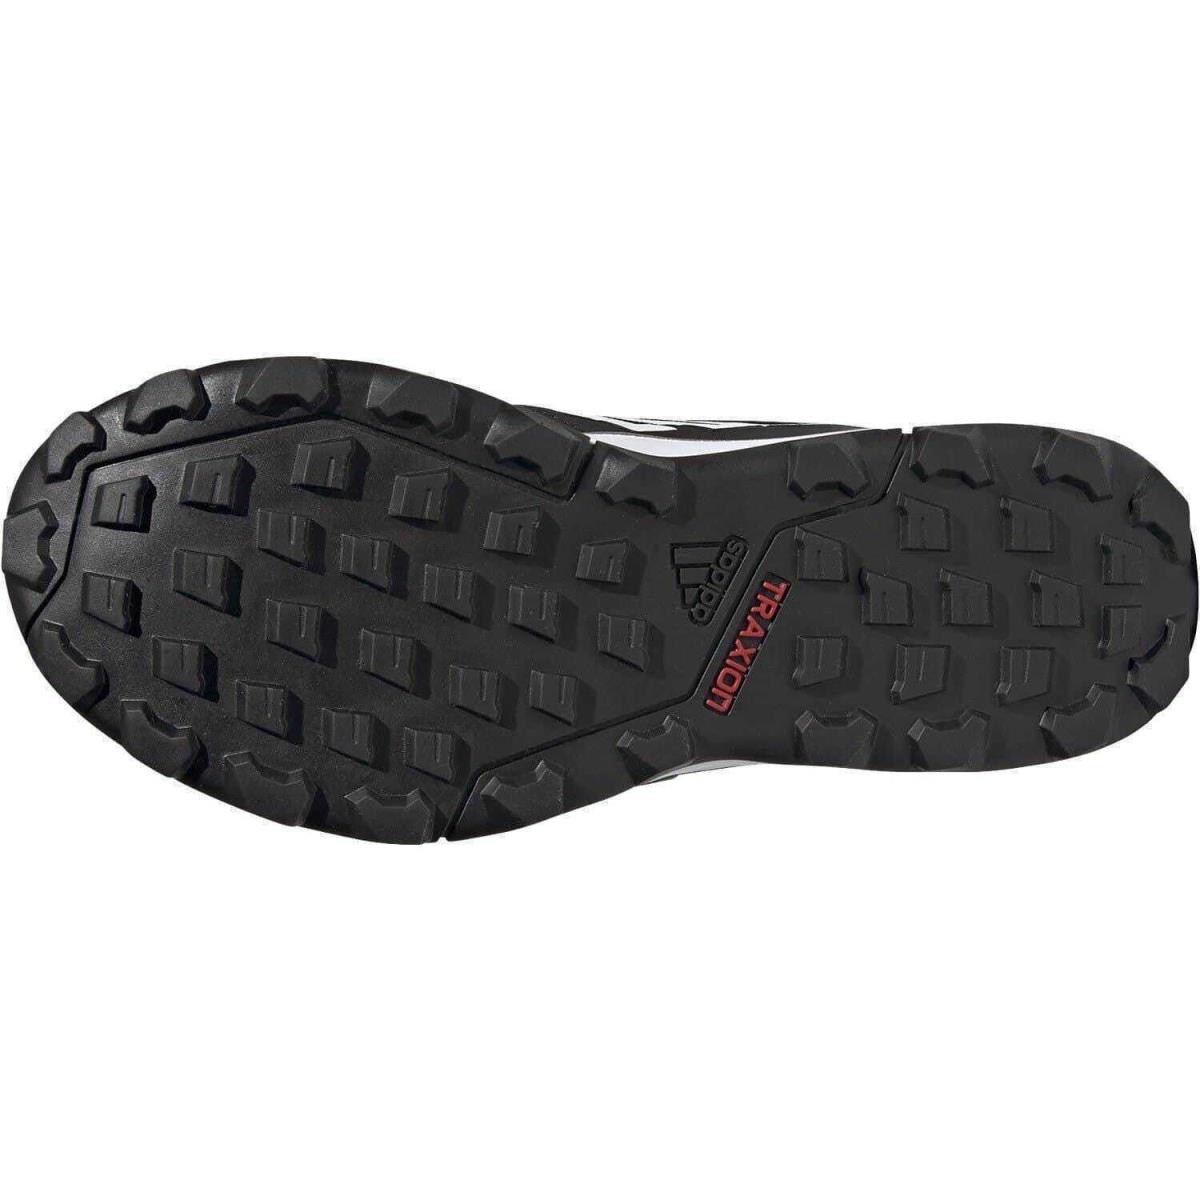 Adidas shoes TERREX Agravic - Black/Aqua 5